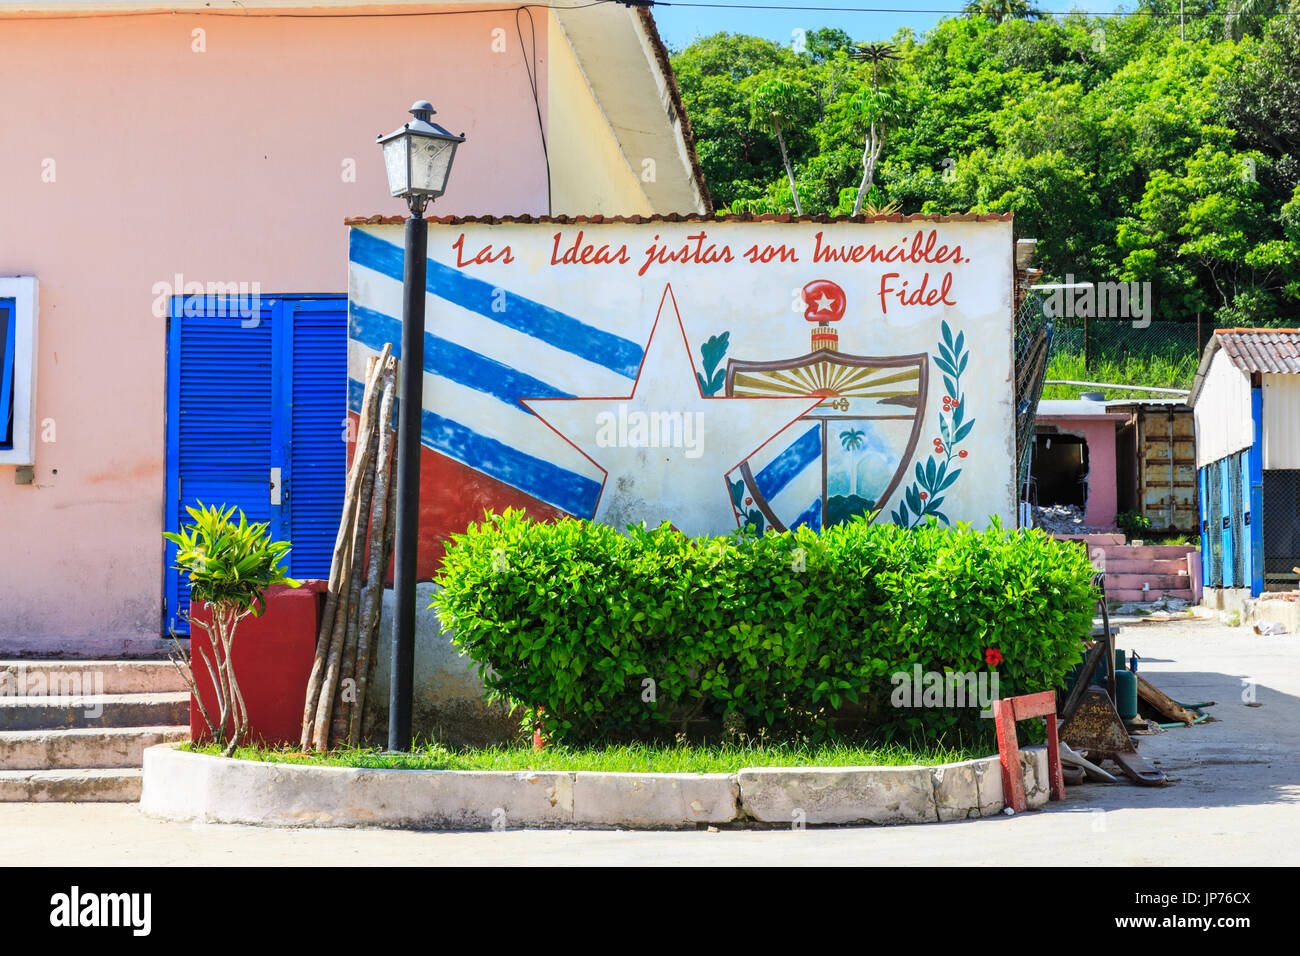 Las ideas justas son invencibles, Fidel. Socialist propaganda wall mural in Jibacoa, Cuba Stock Photo